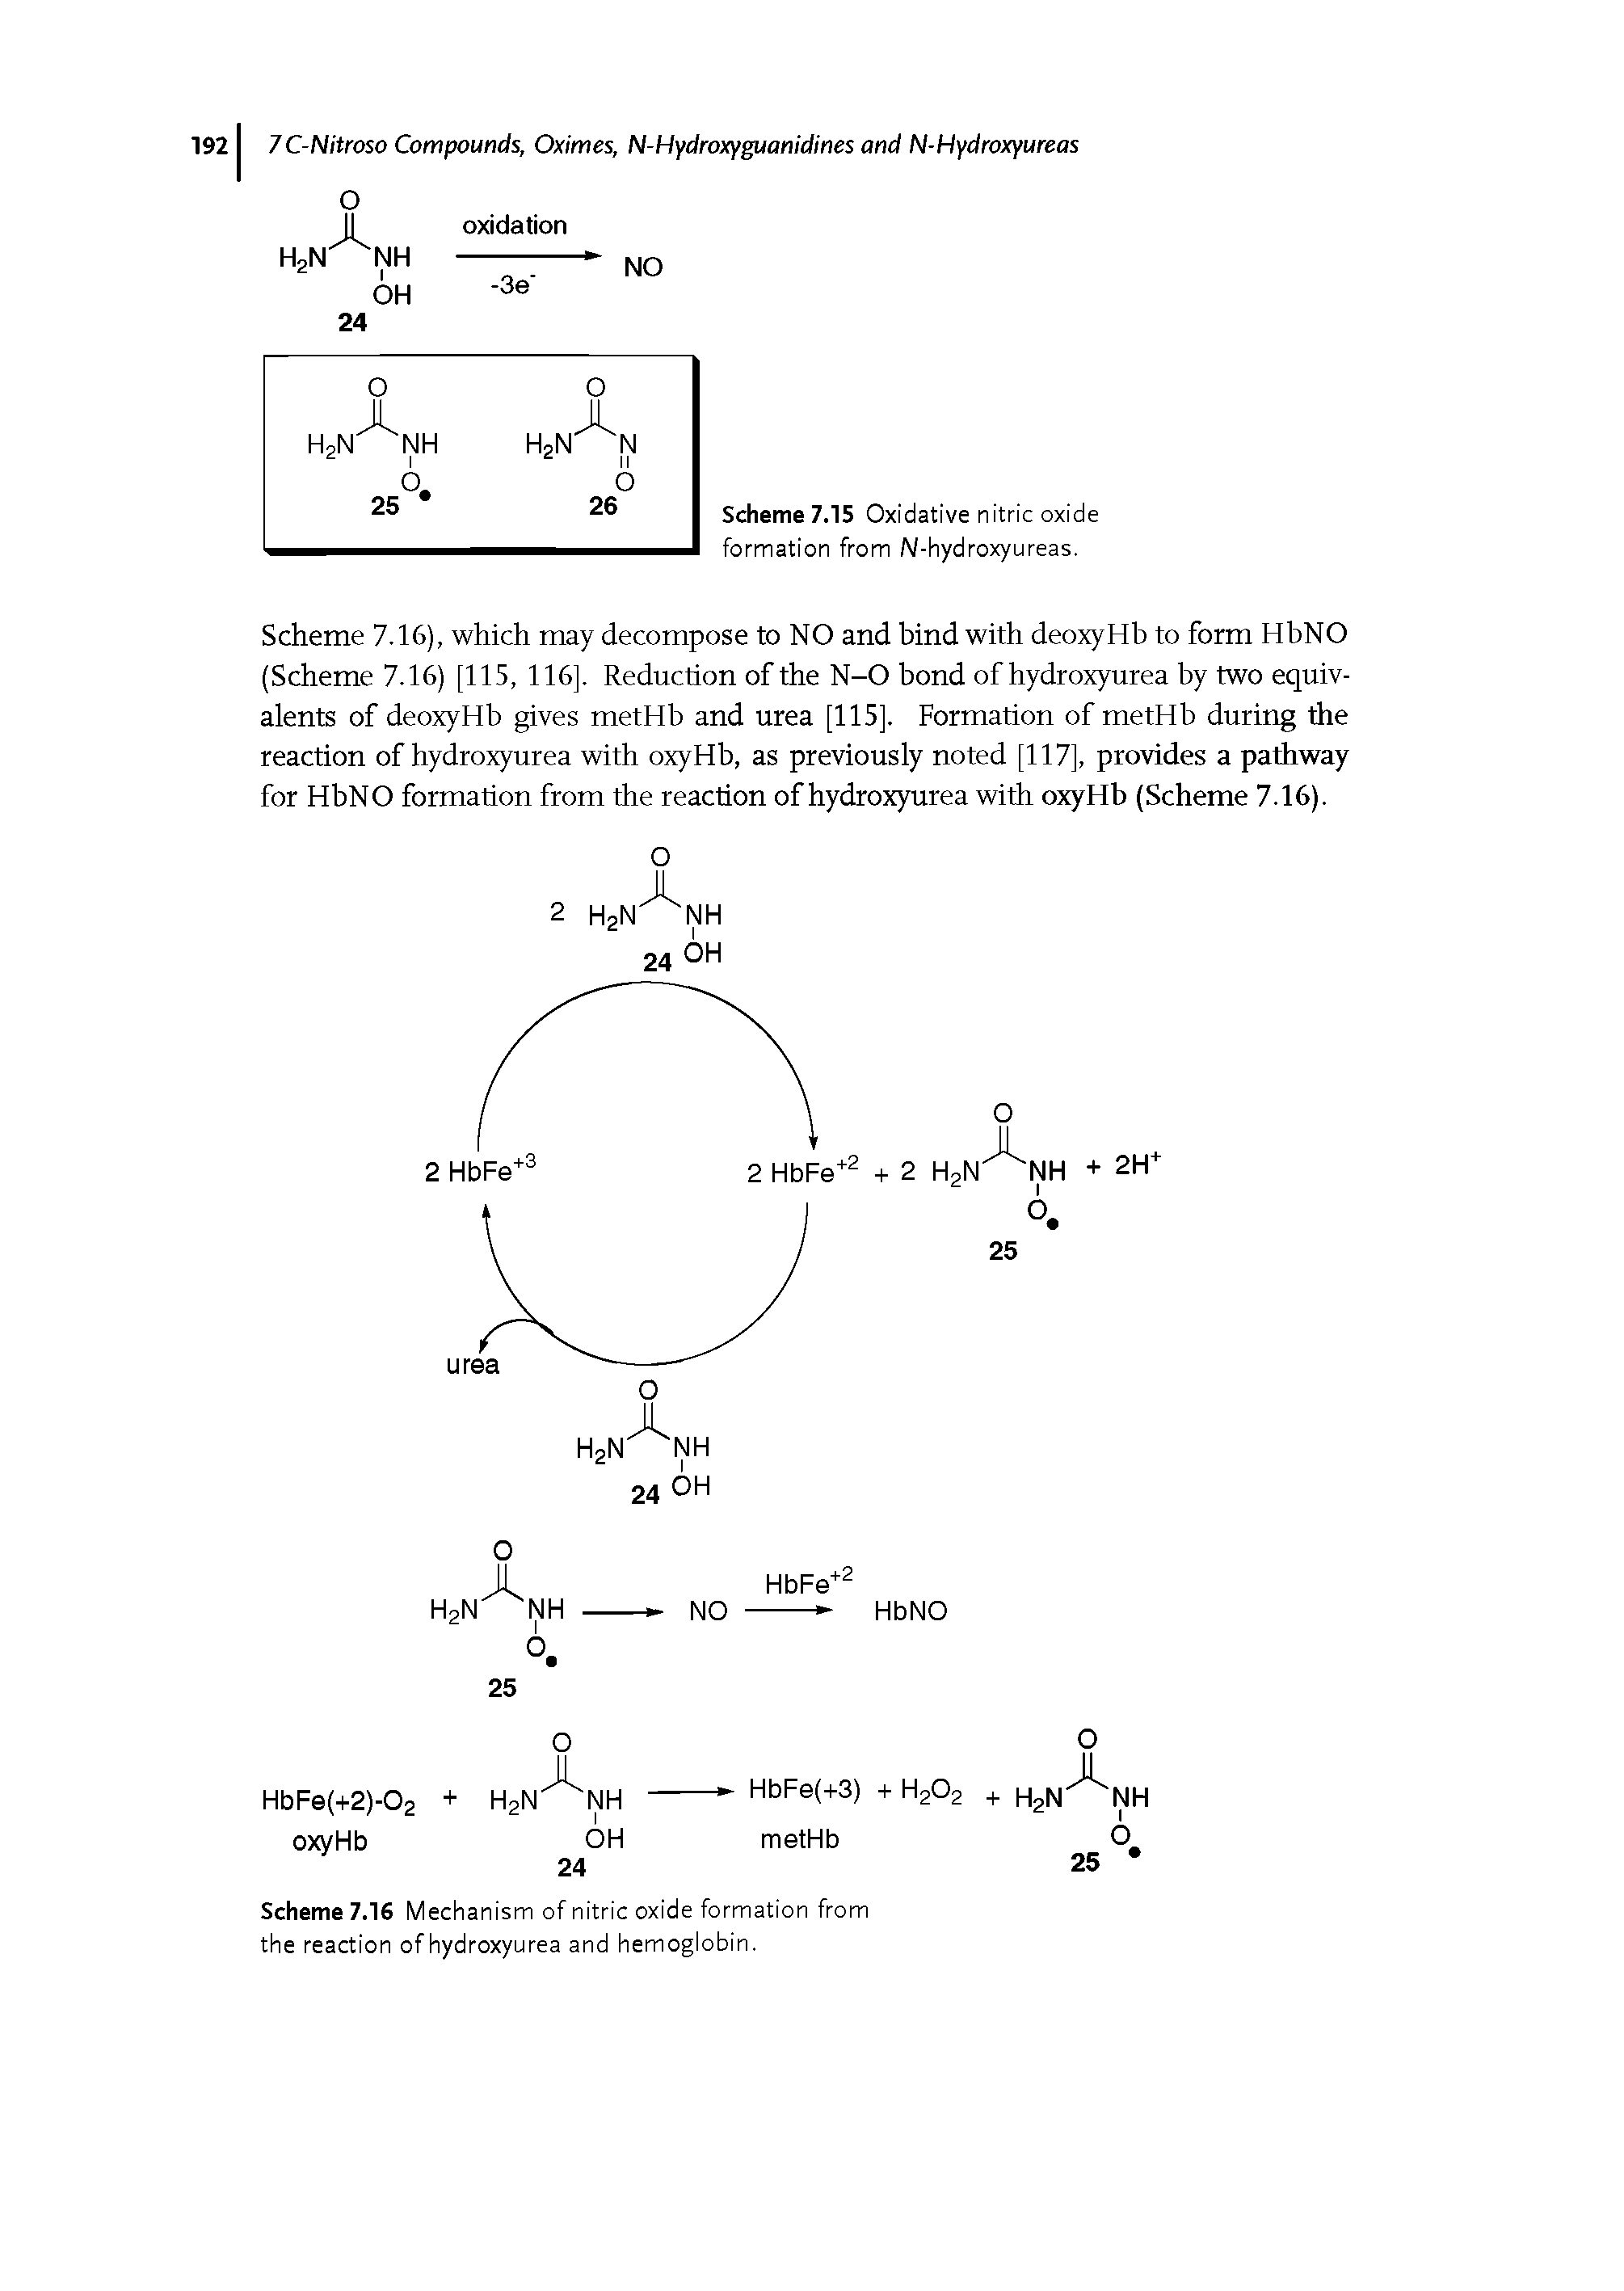 Scheme 7.15 Oxidative nitric oxide formation from N-hydroxyureas.